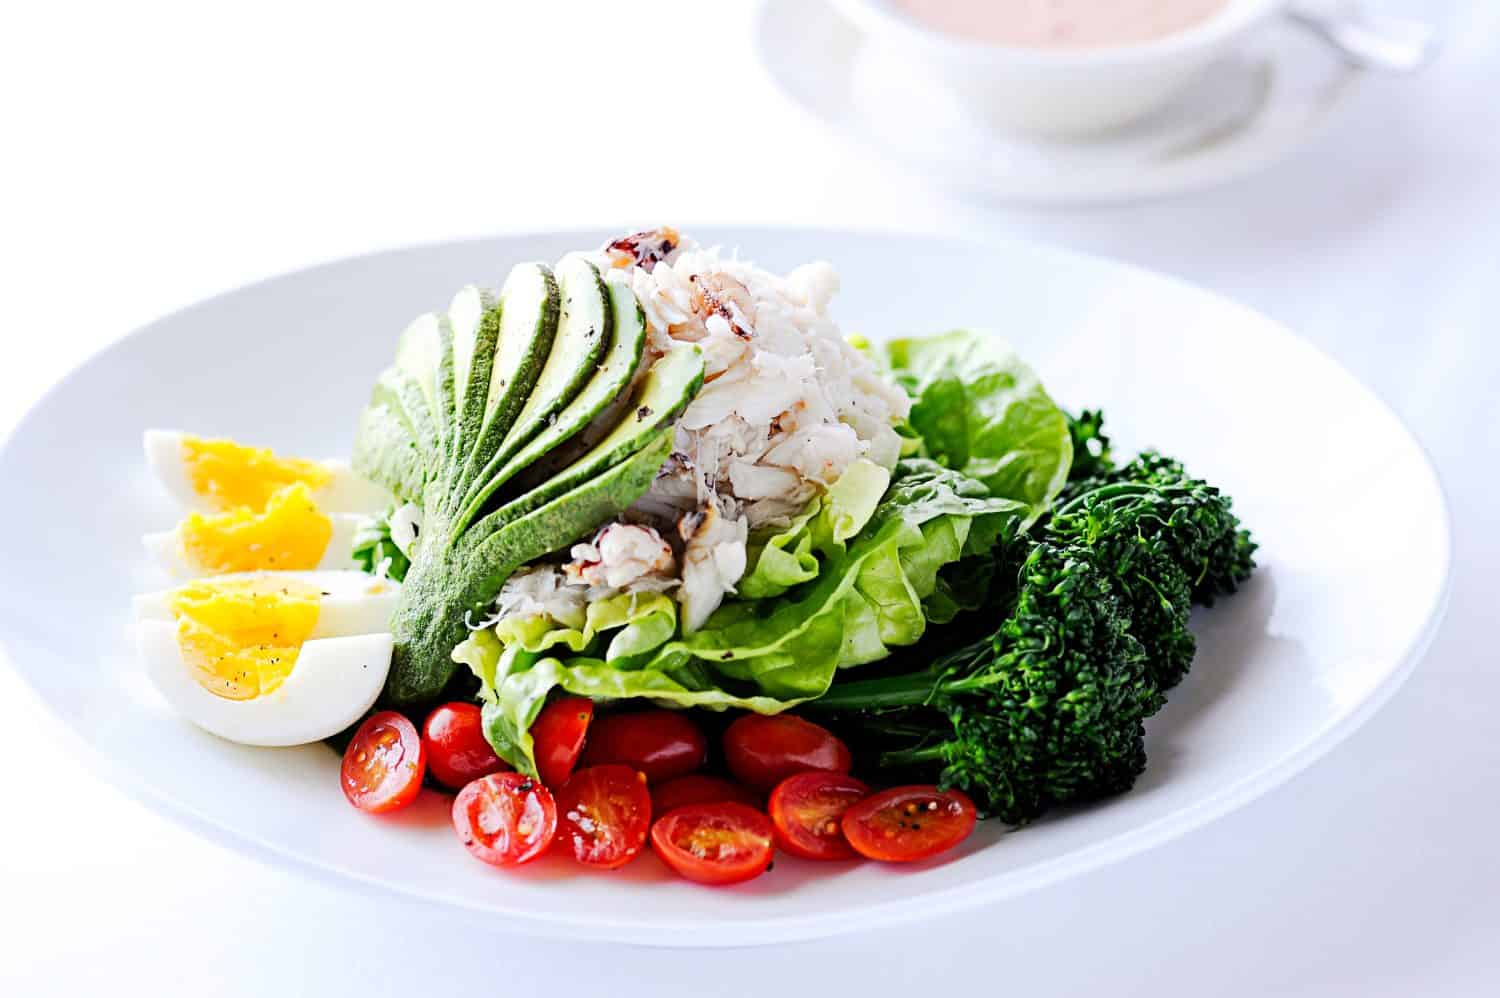 Crab louie salad on restaurant table